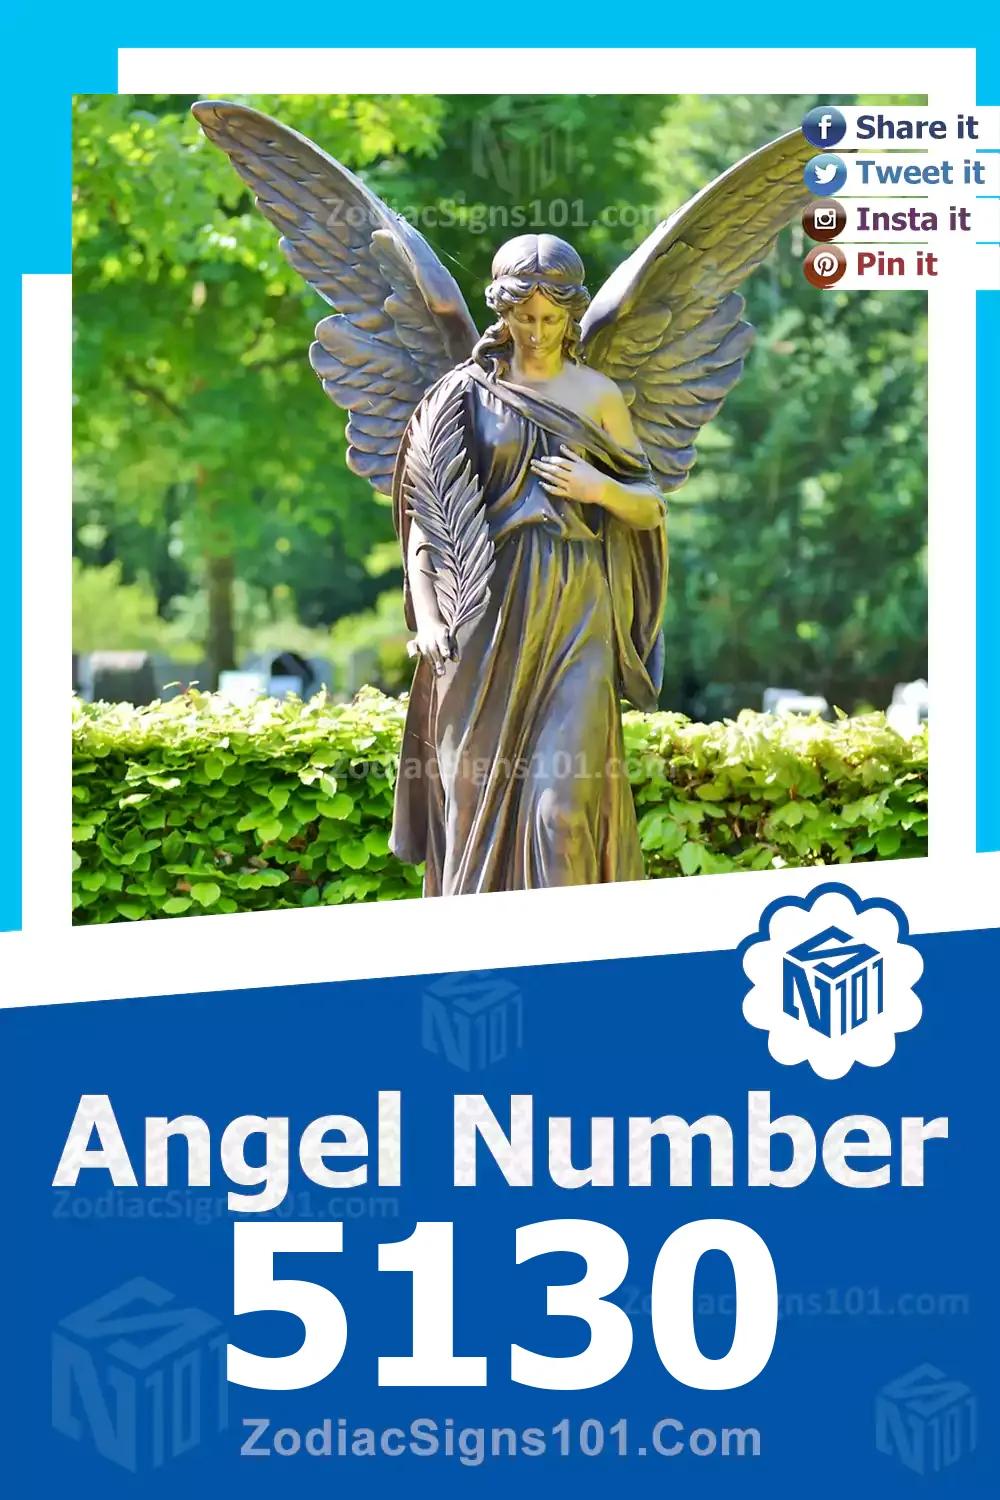 5130-Angel-Number-Meaning.jpg